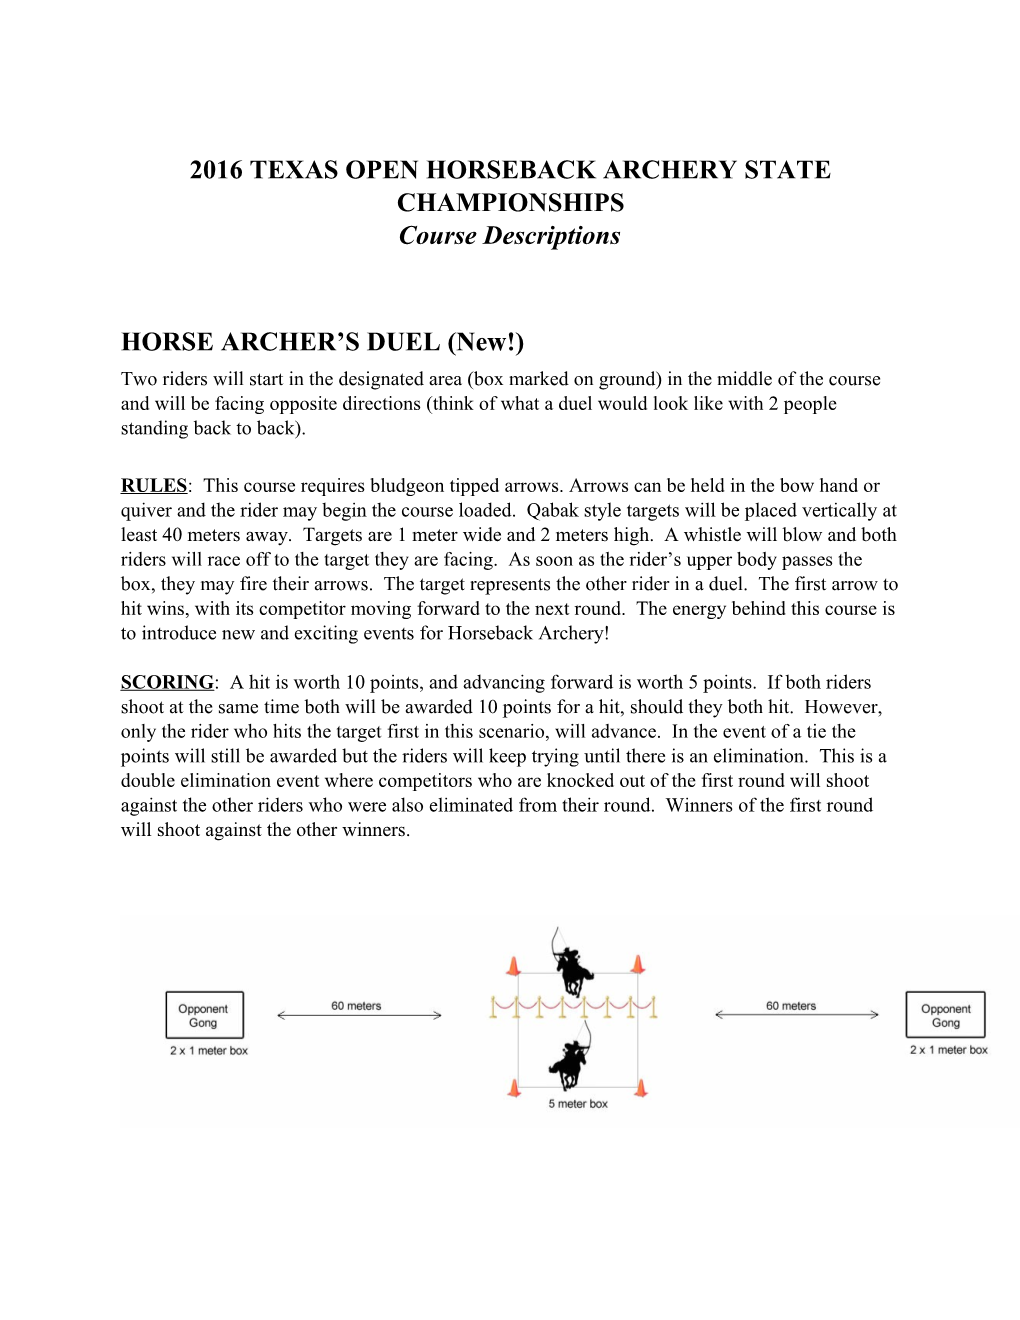 2016 Texas Openhorseback Archery State Championships